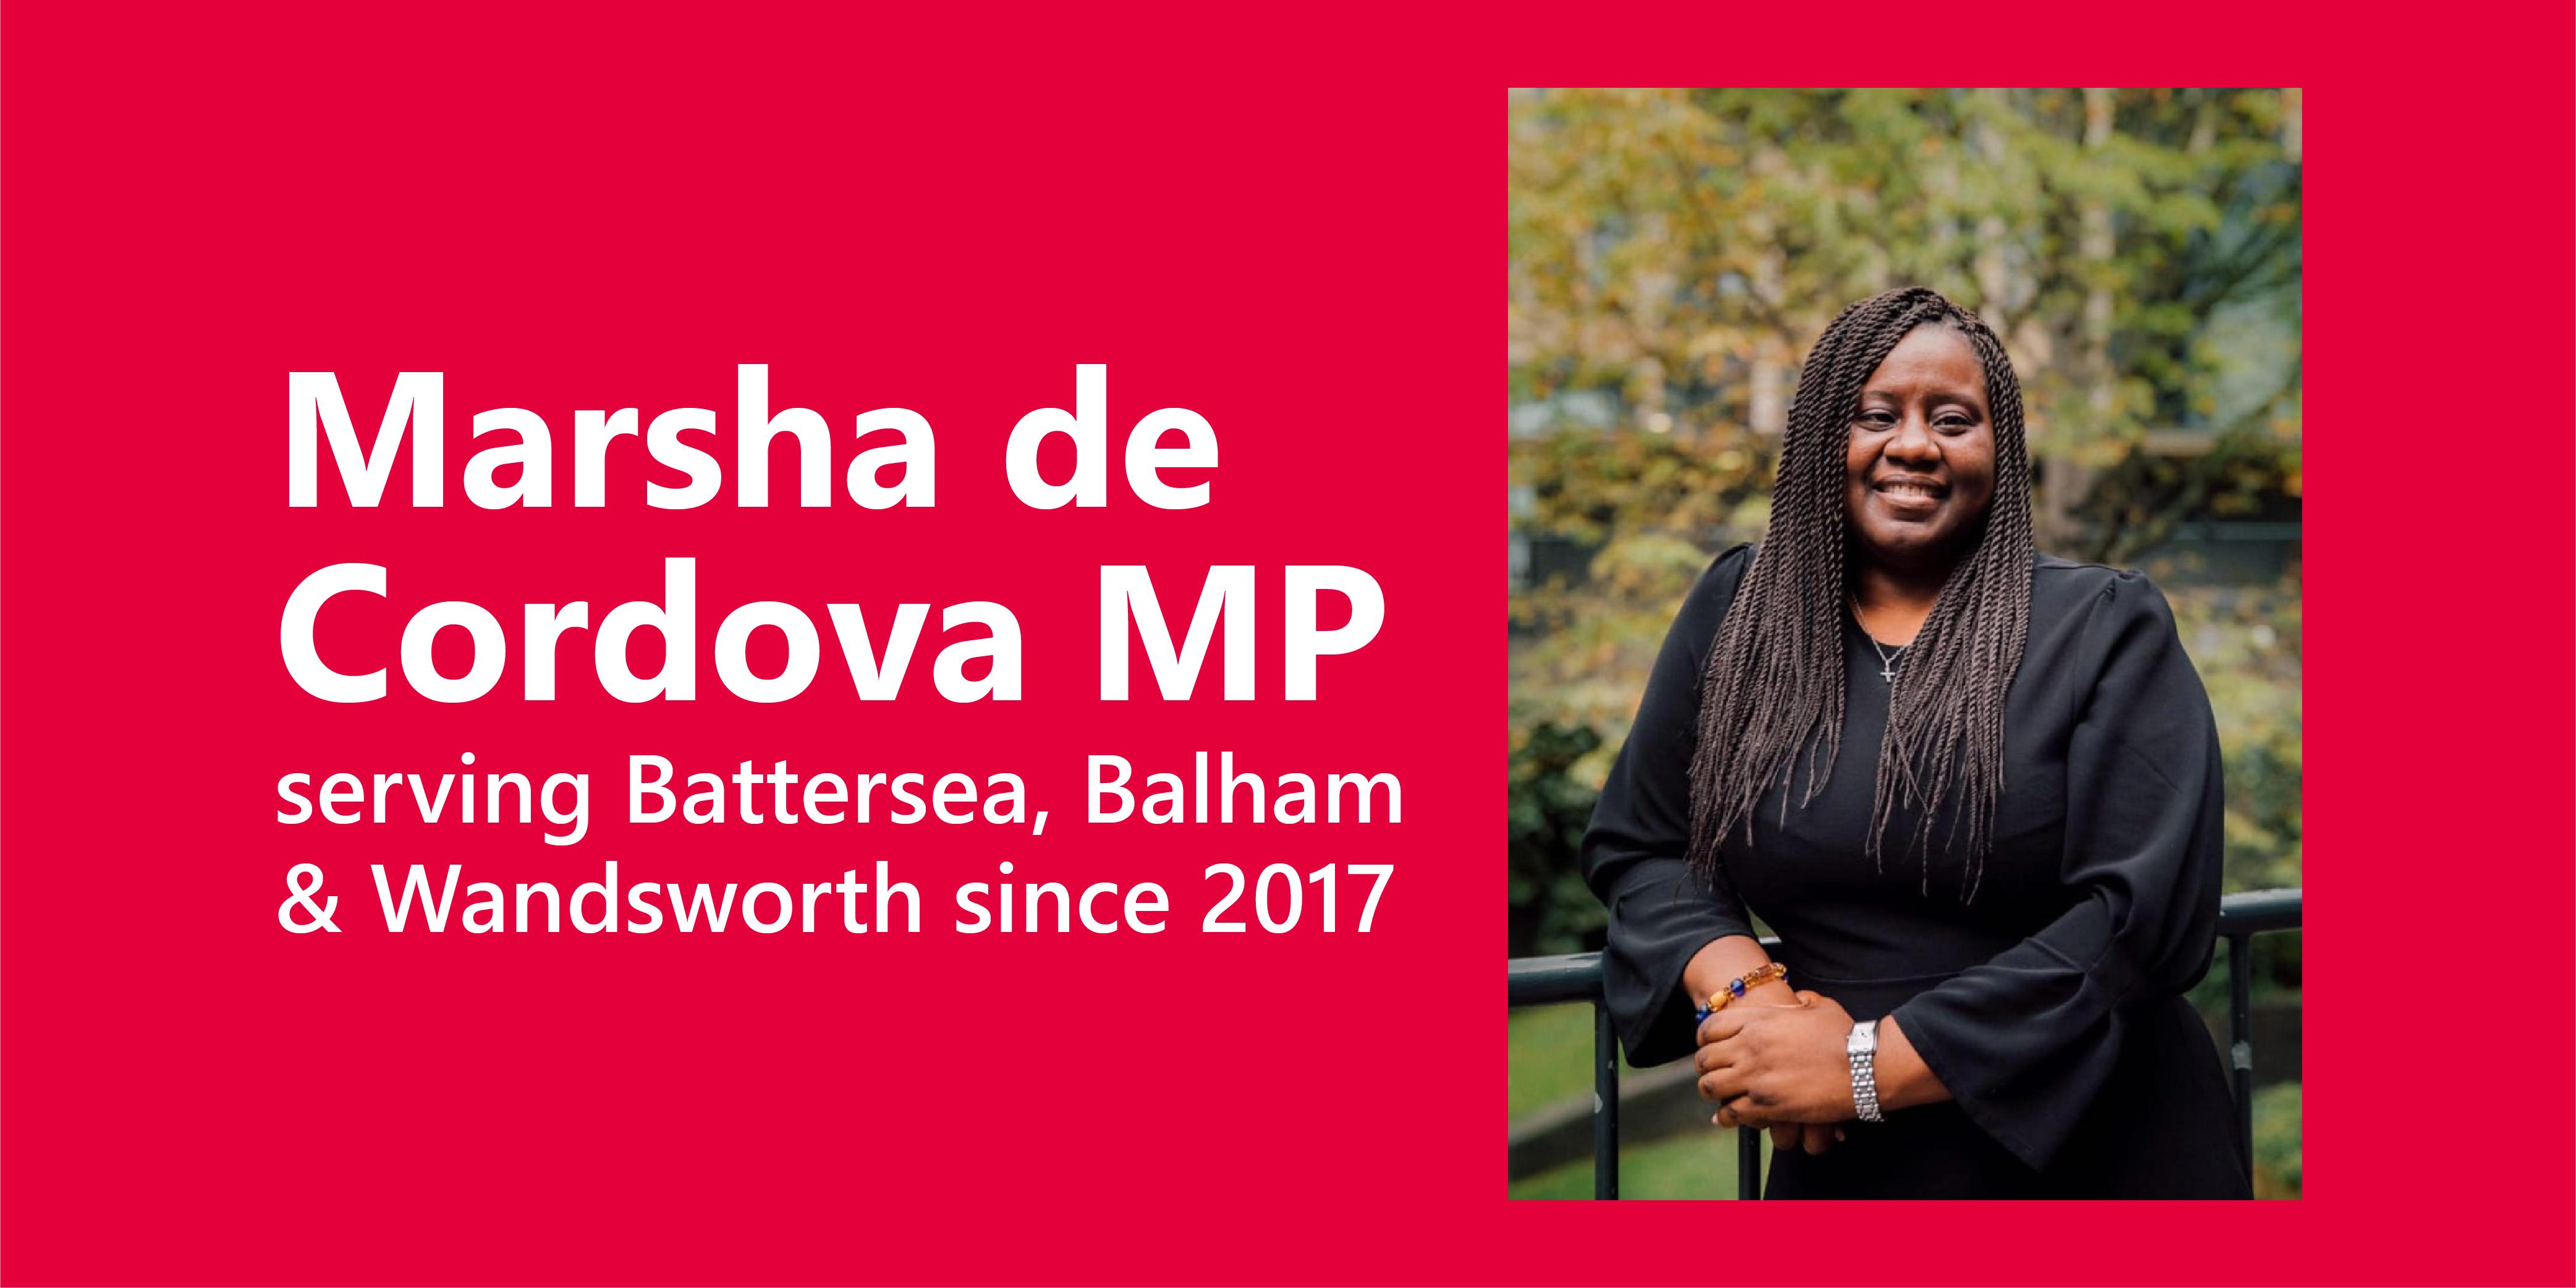 Marsha de Cordova MP, serving Battersea, Balham and Wandsworth since 2017.